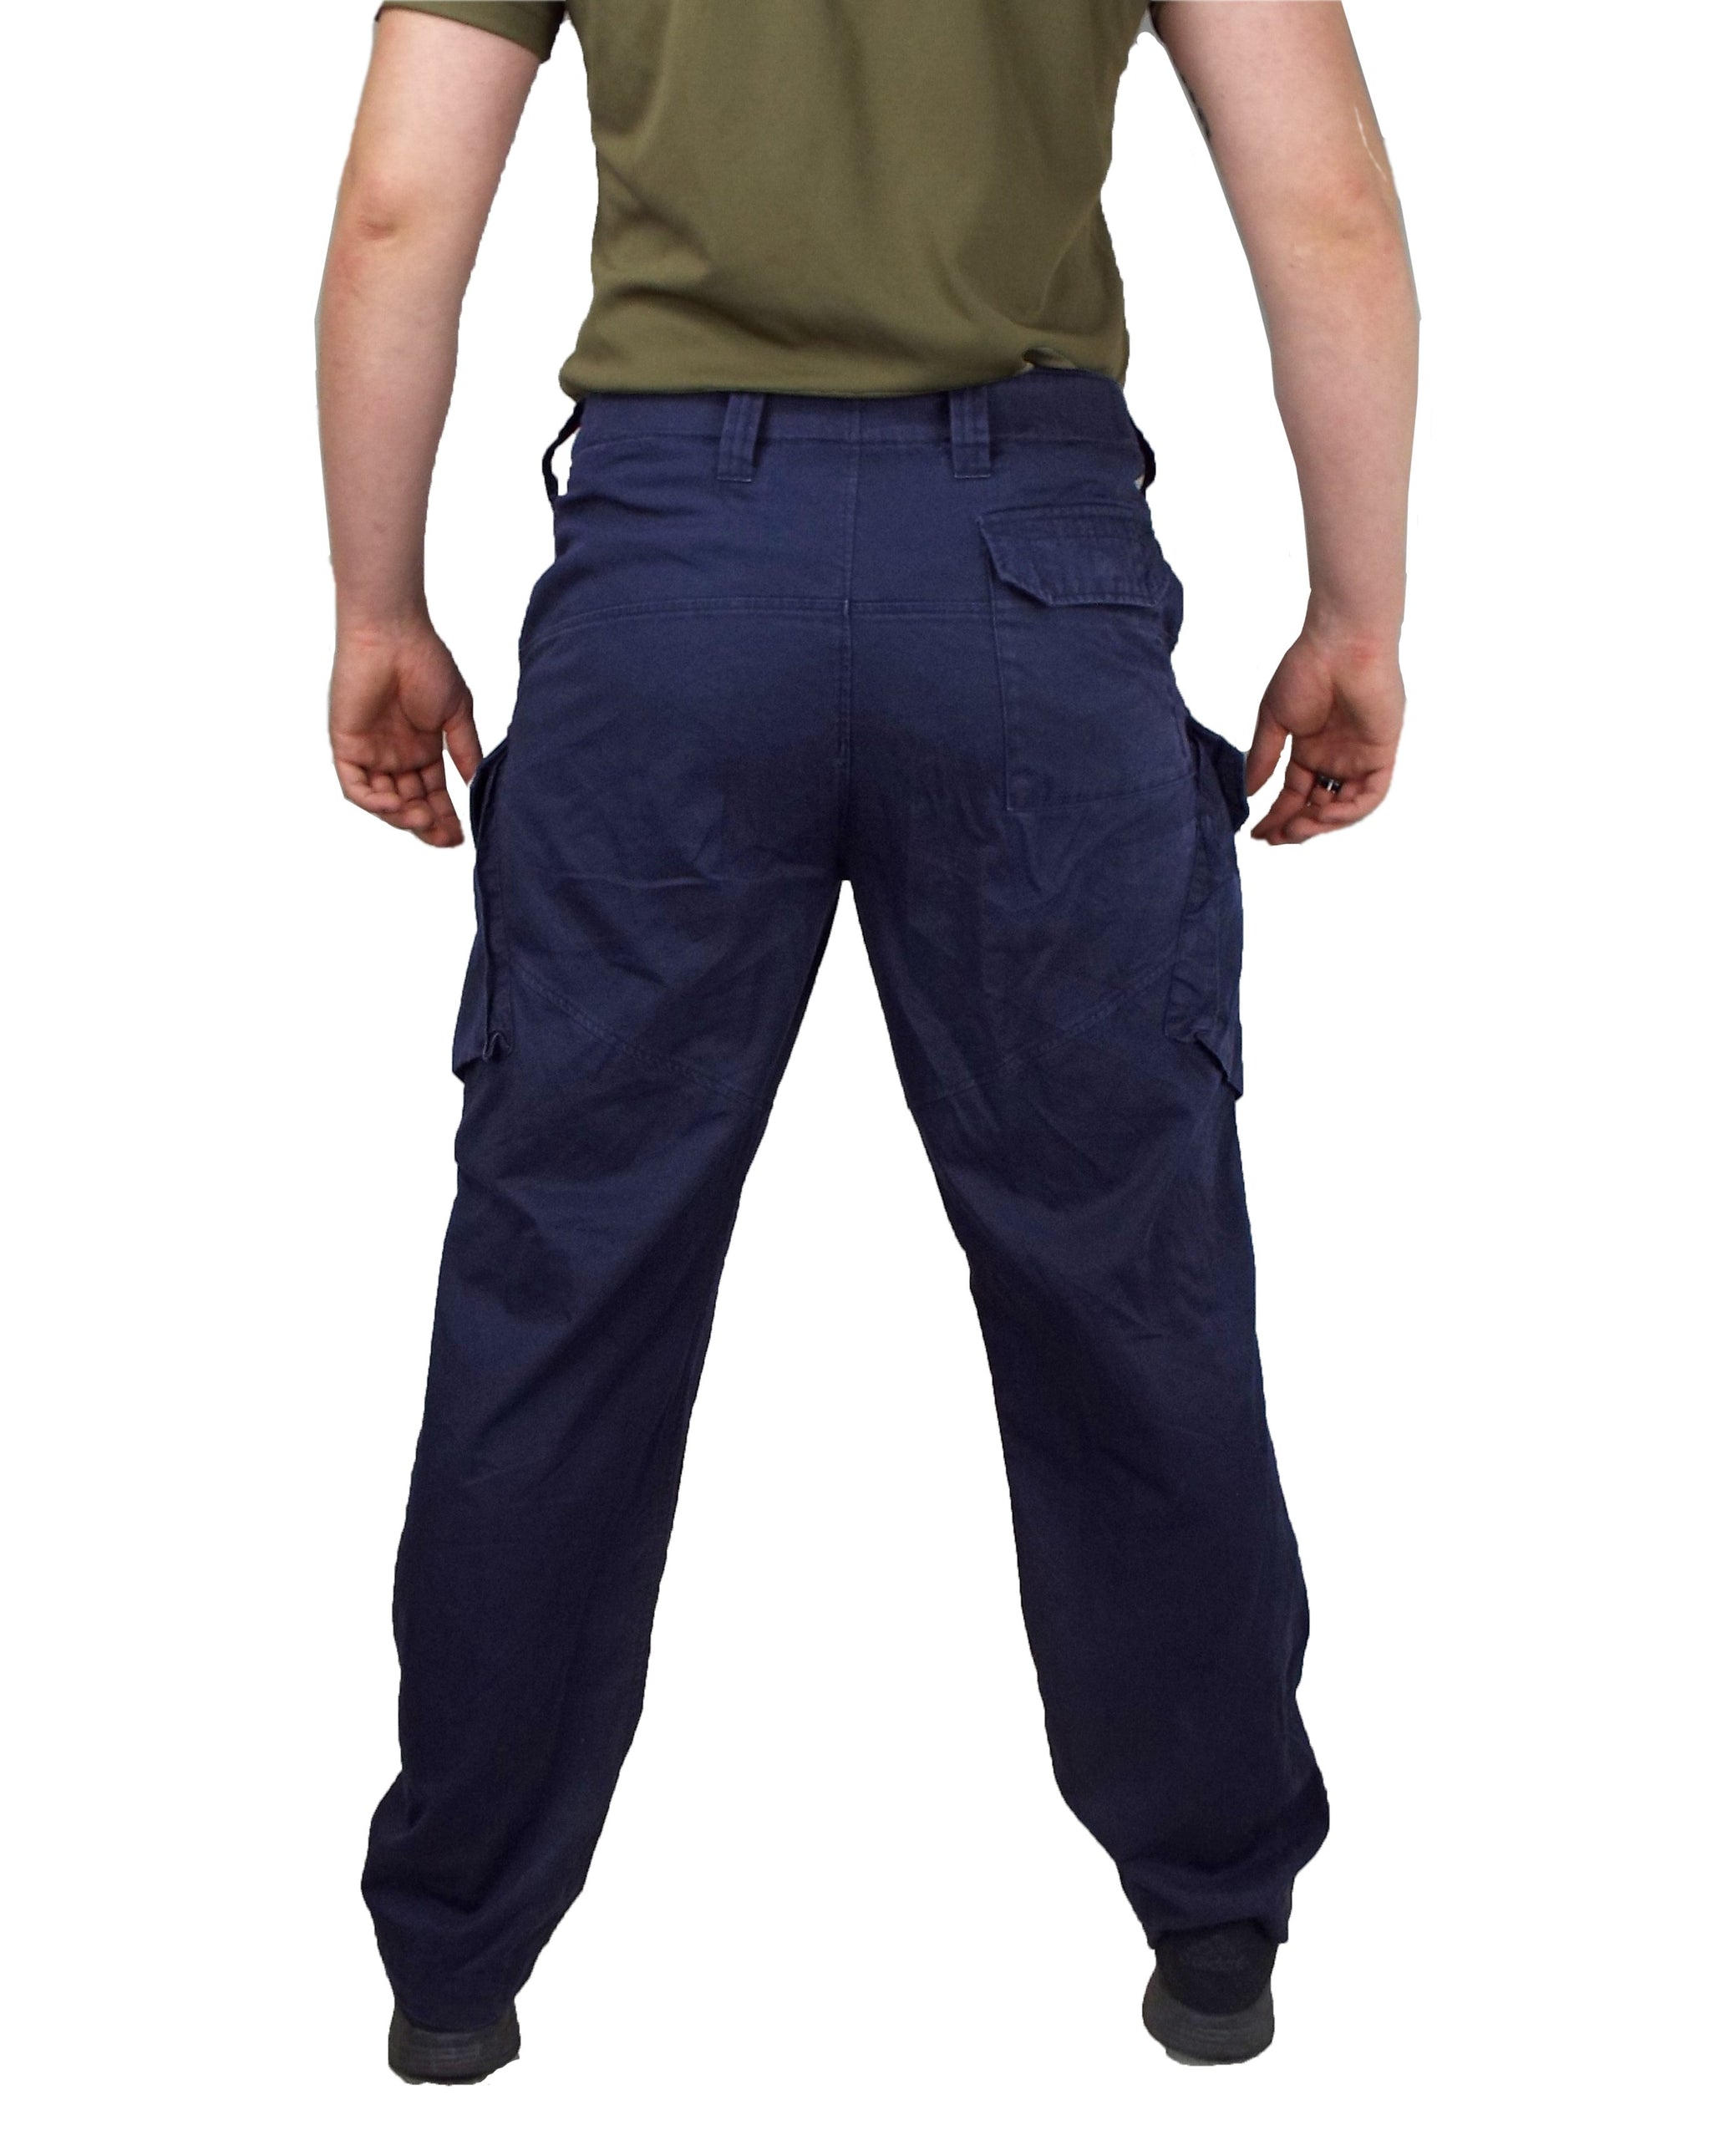 British Royal Navy Dark Blue Combat Trousers - Five pocket 